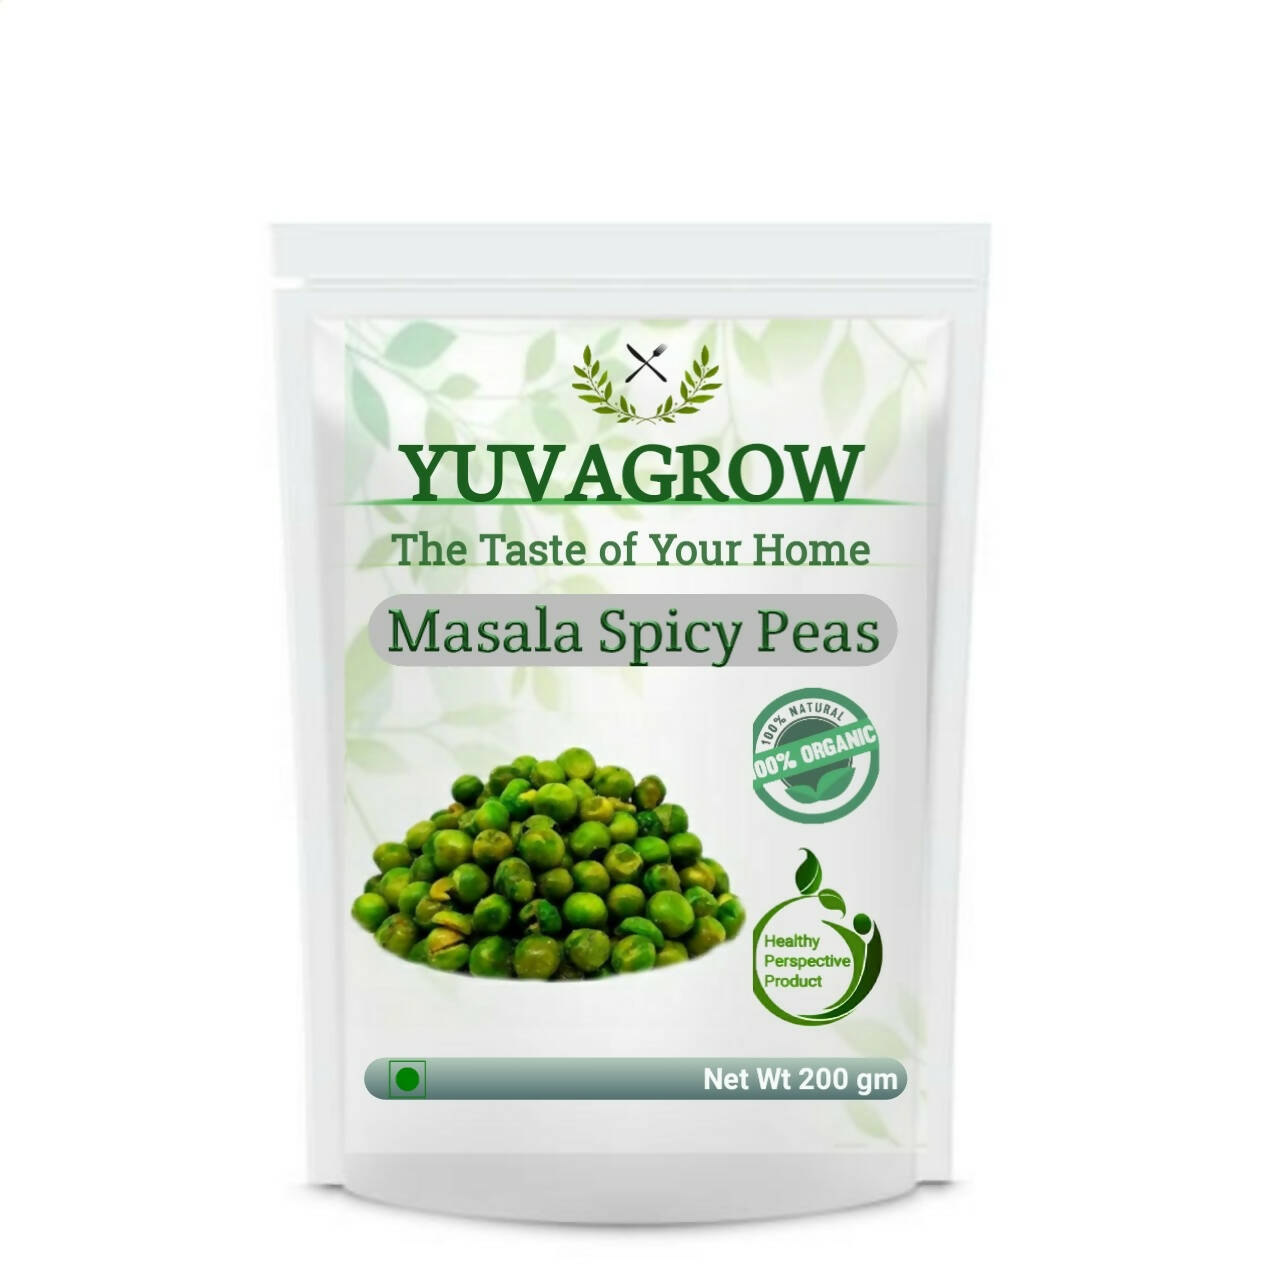 Yuvagrow Masala Spicy Peas - buy in USA, Australia, Canada